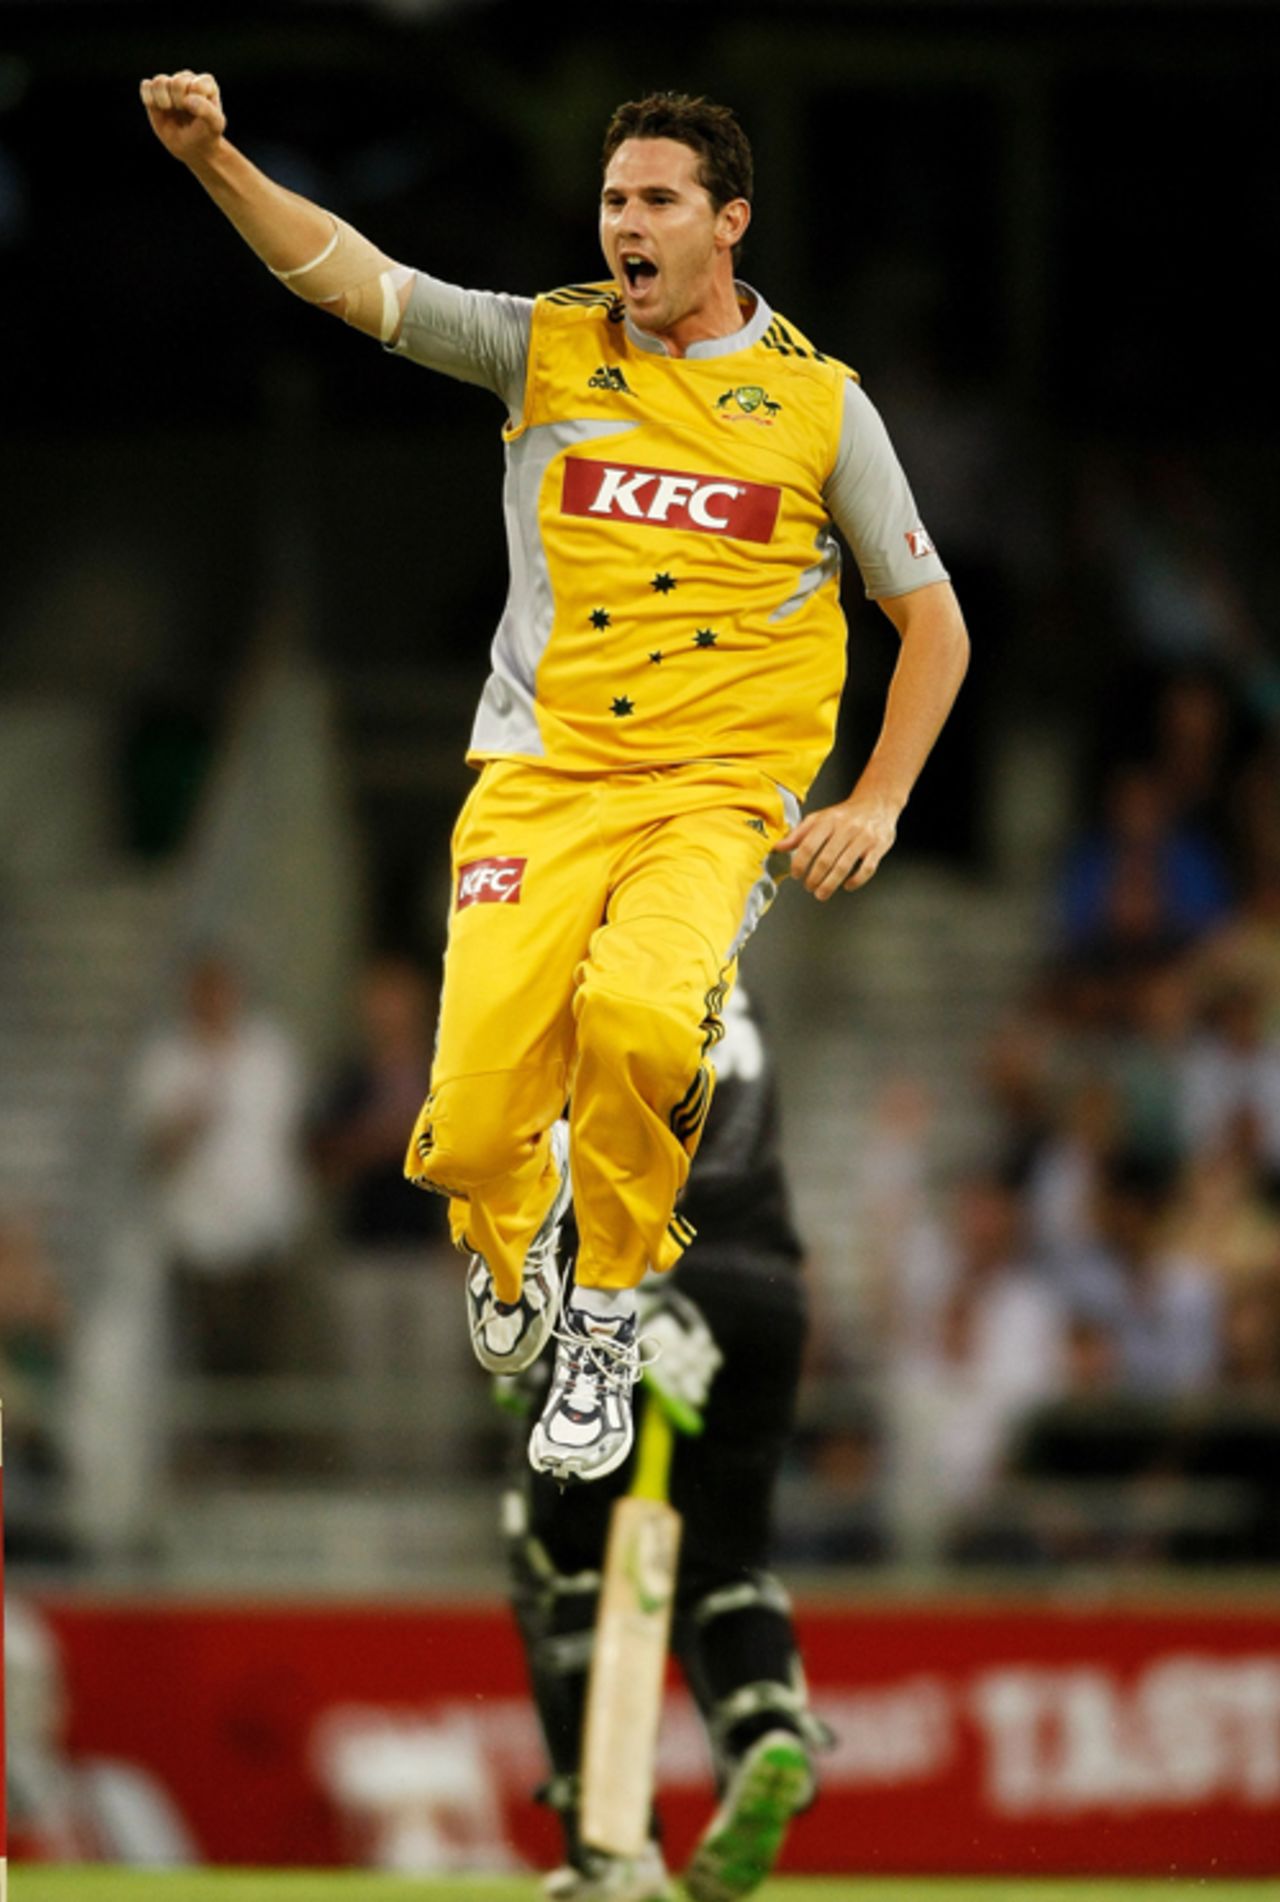 Shaun Tait, making his Twenty20 debut, celebrates one of his two wickets, Australia v New Zealand, Twenty20 International, Perth, December 11, 2007 
